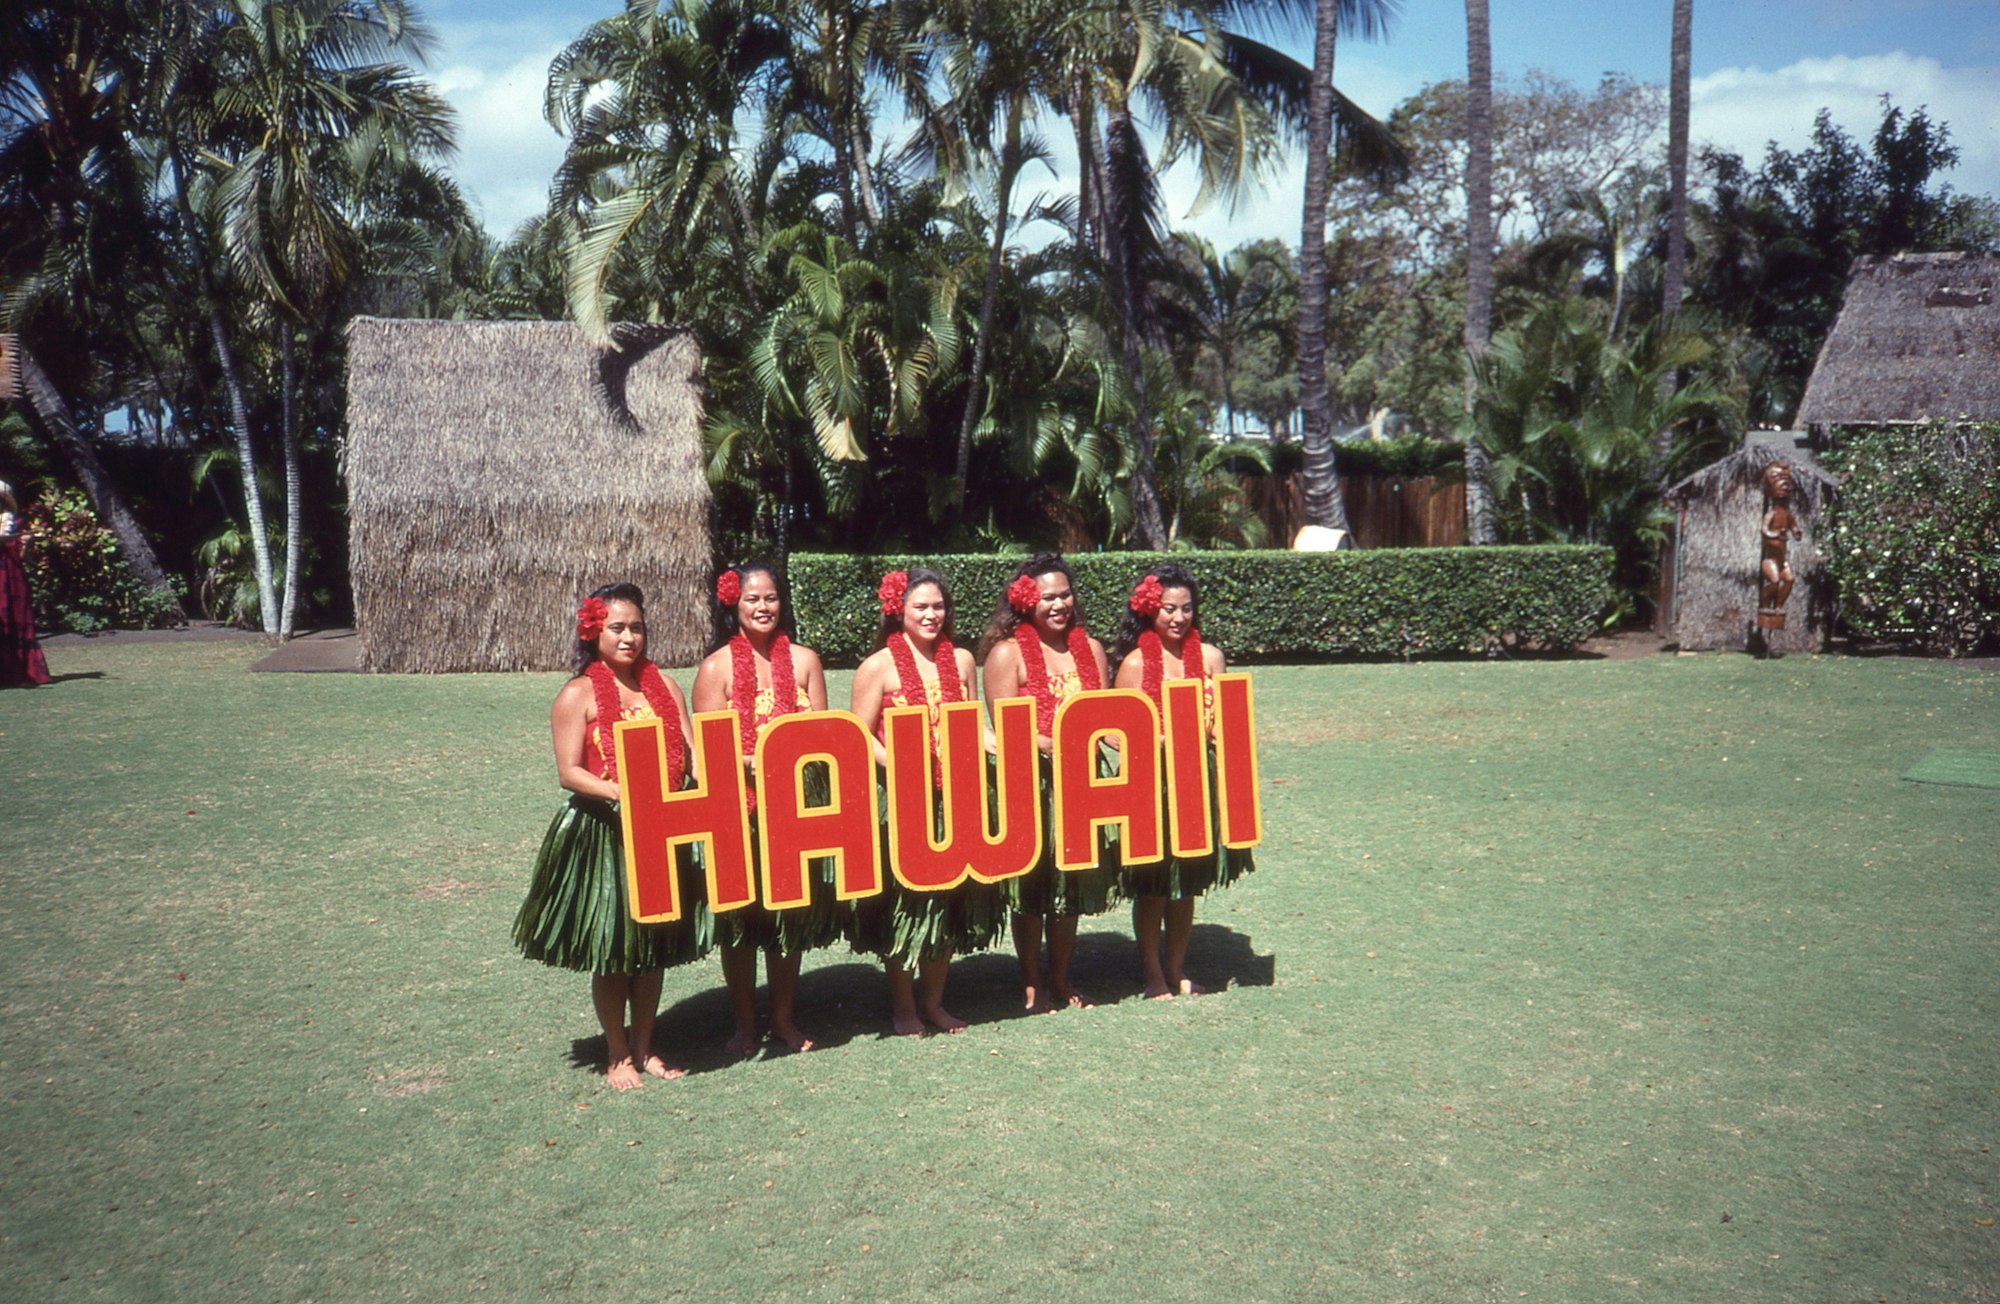 KODAK Hawaii show in Honolulu in 1994 shot on Kodachrome film.  Photo was made from scanned 35mm film.